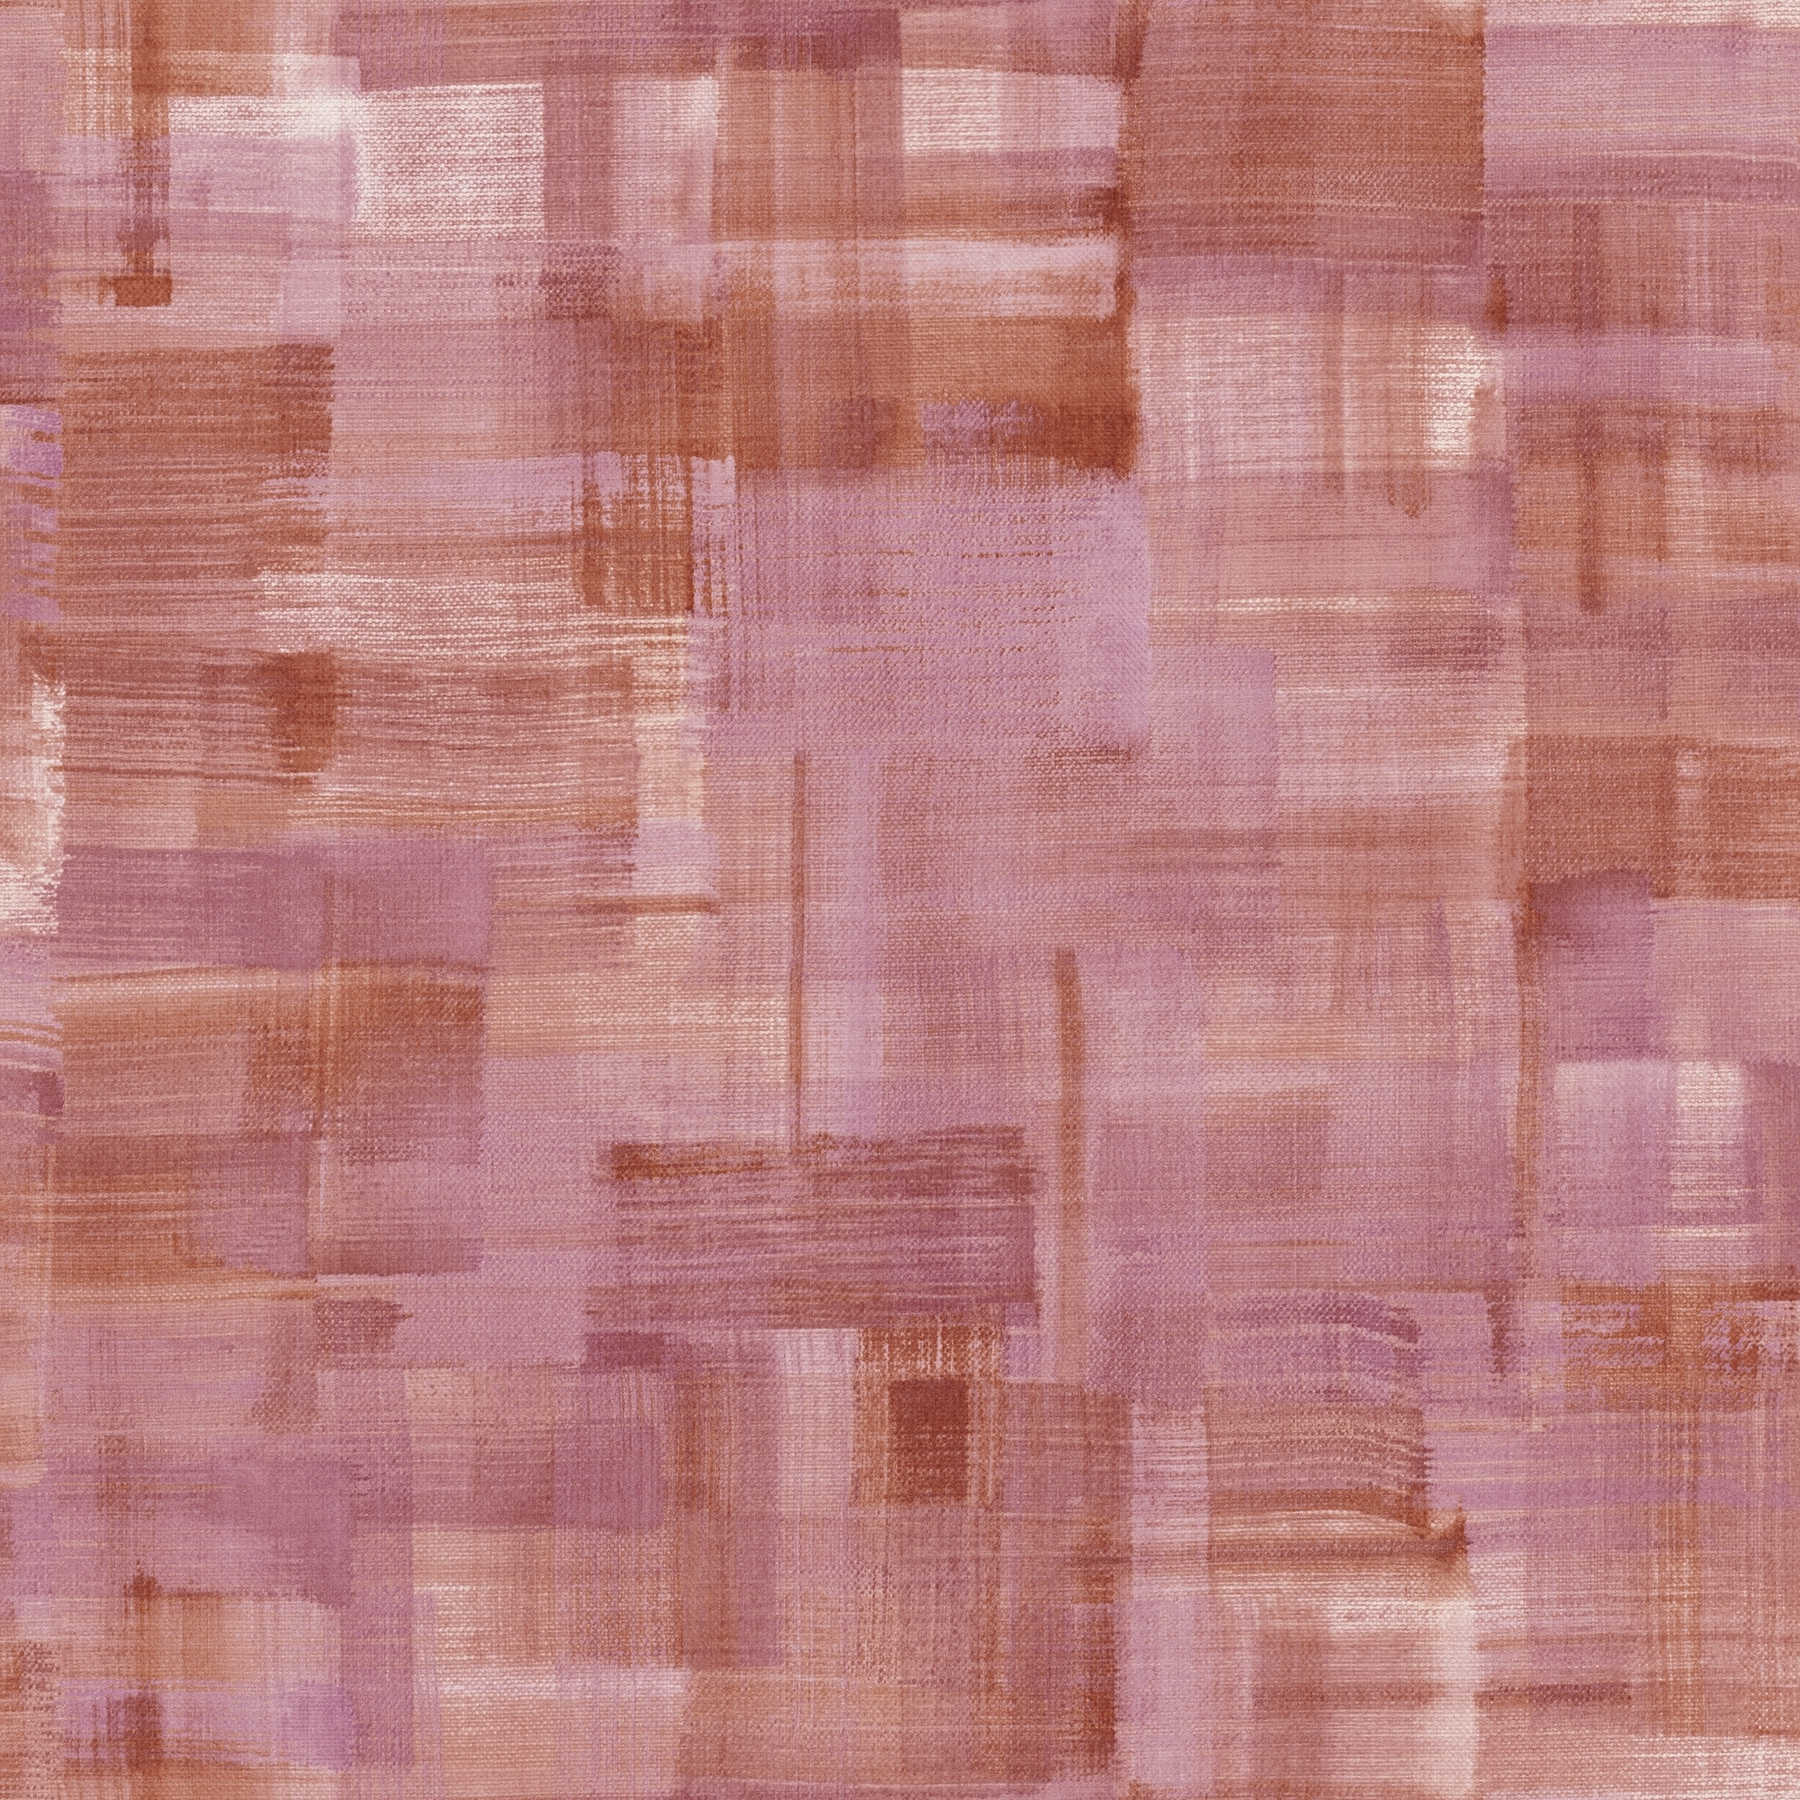 Wallpaper brushstroke design & canvas texture - red, purple
